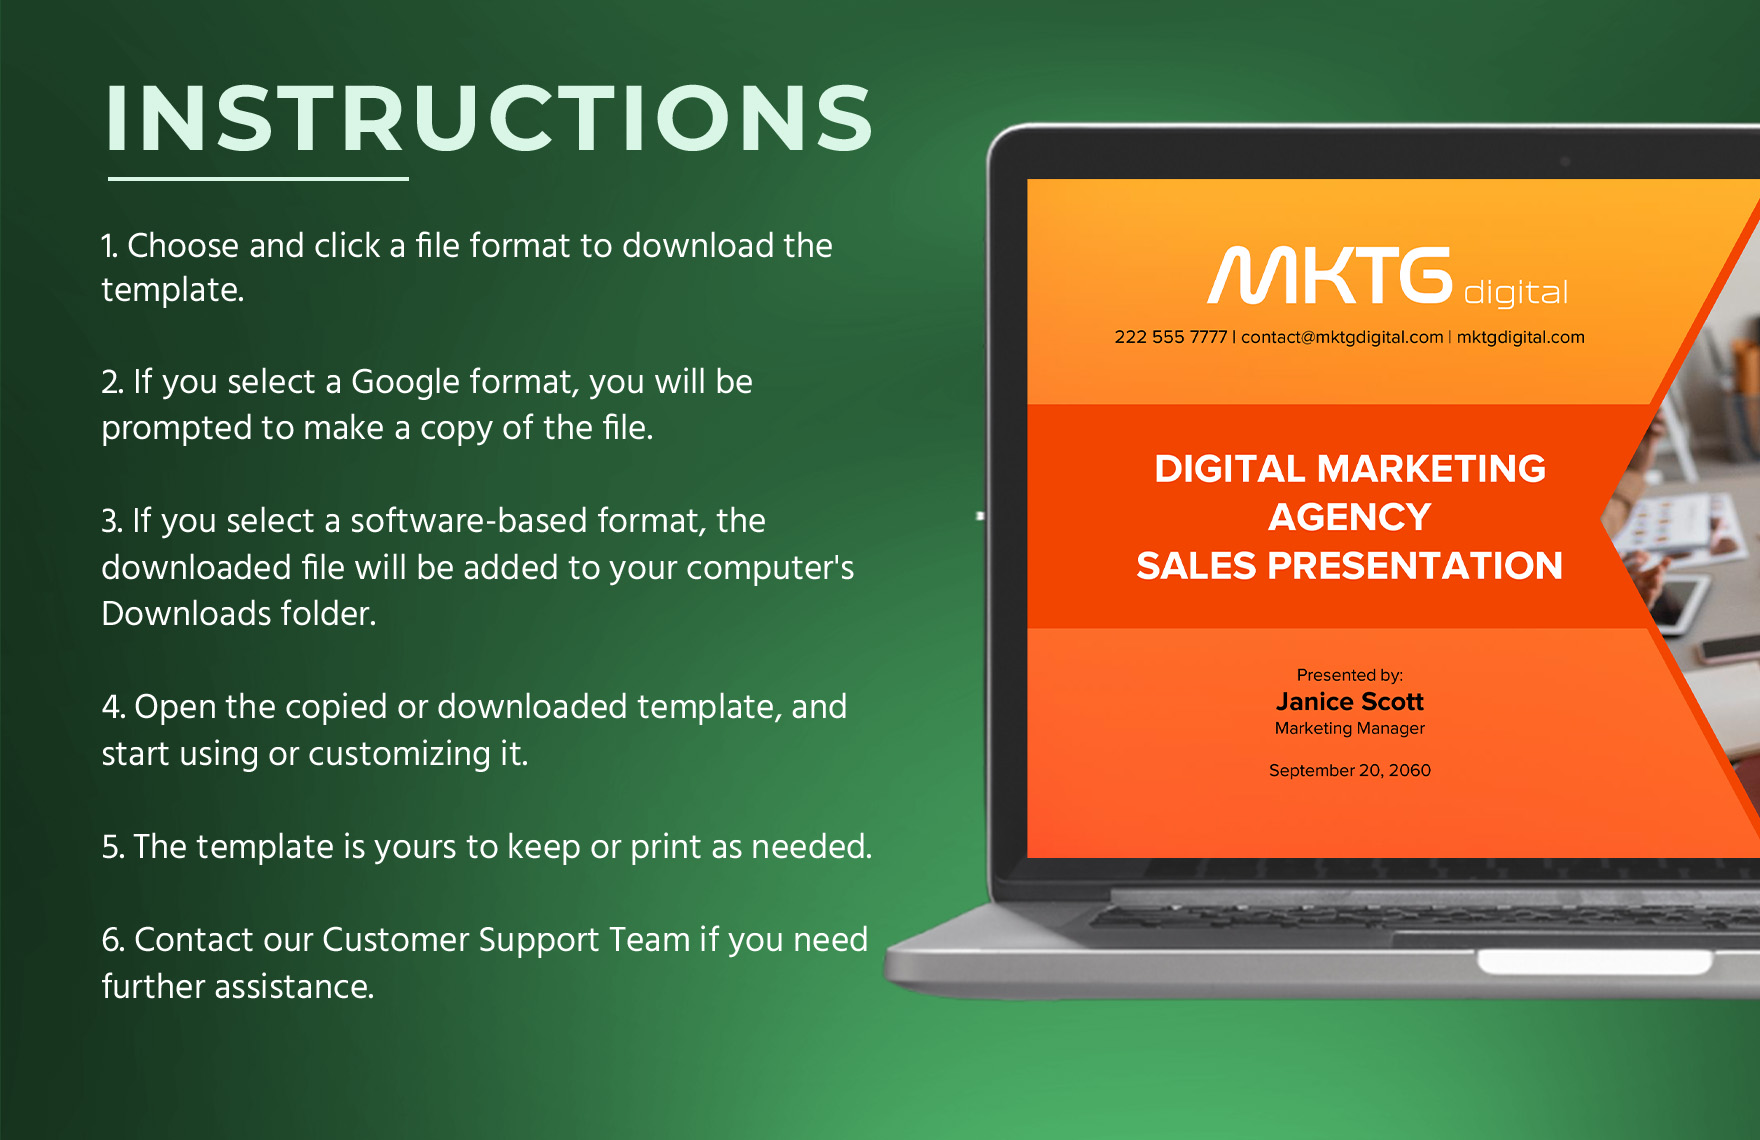 Digital Marketing Agency Sales Presentation Template